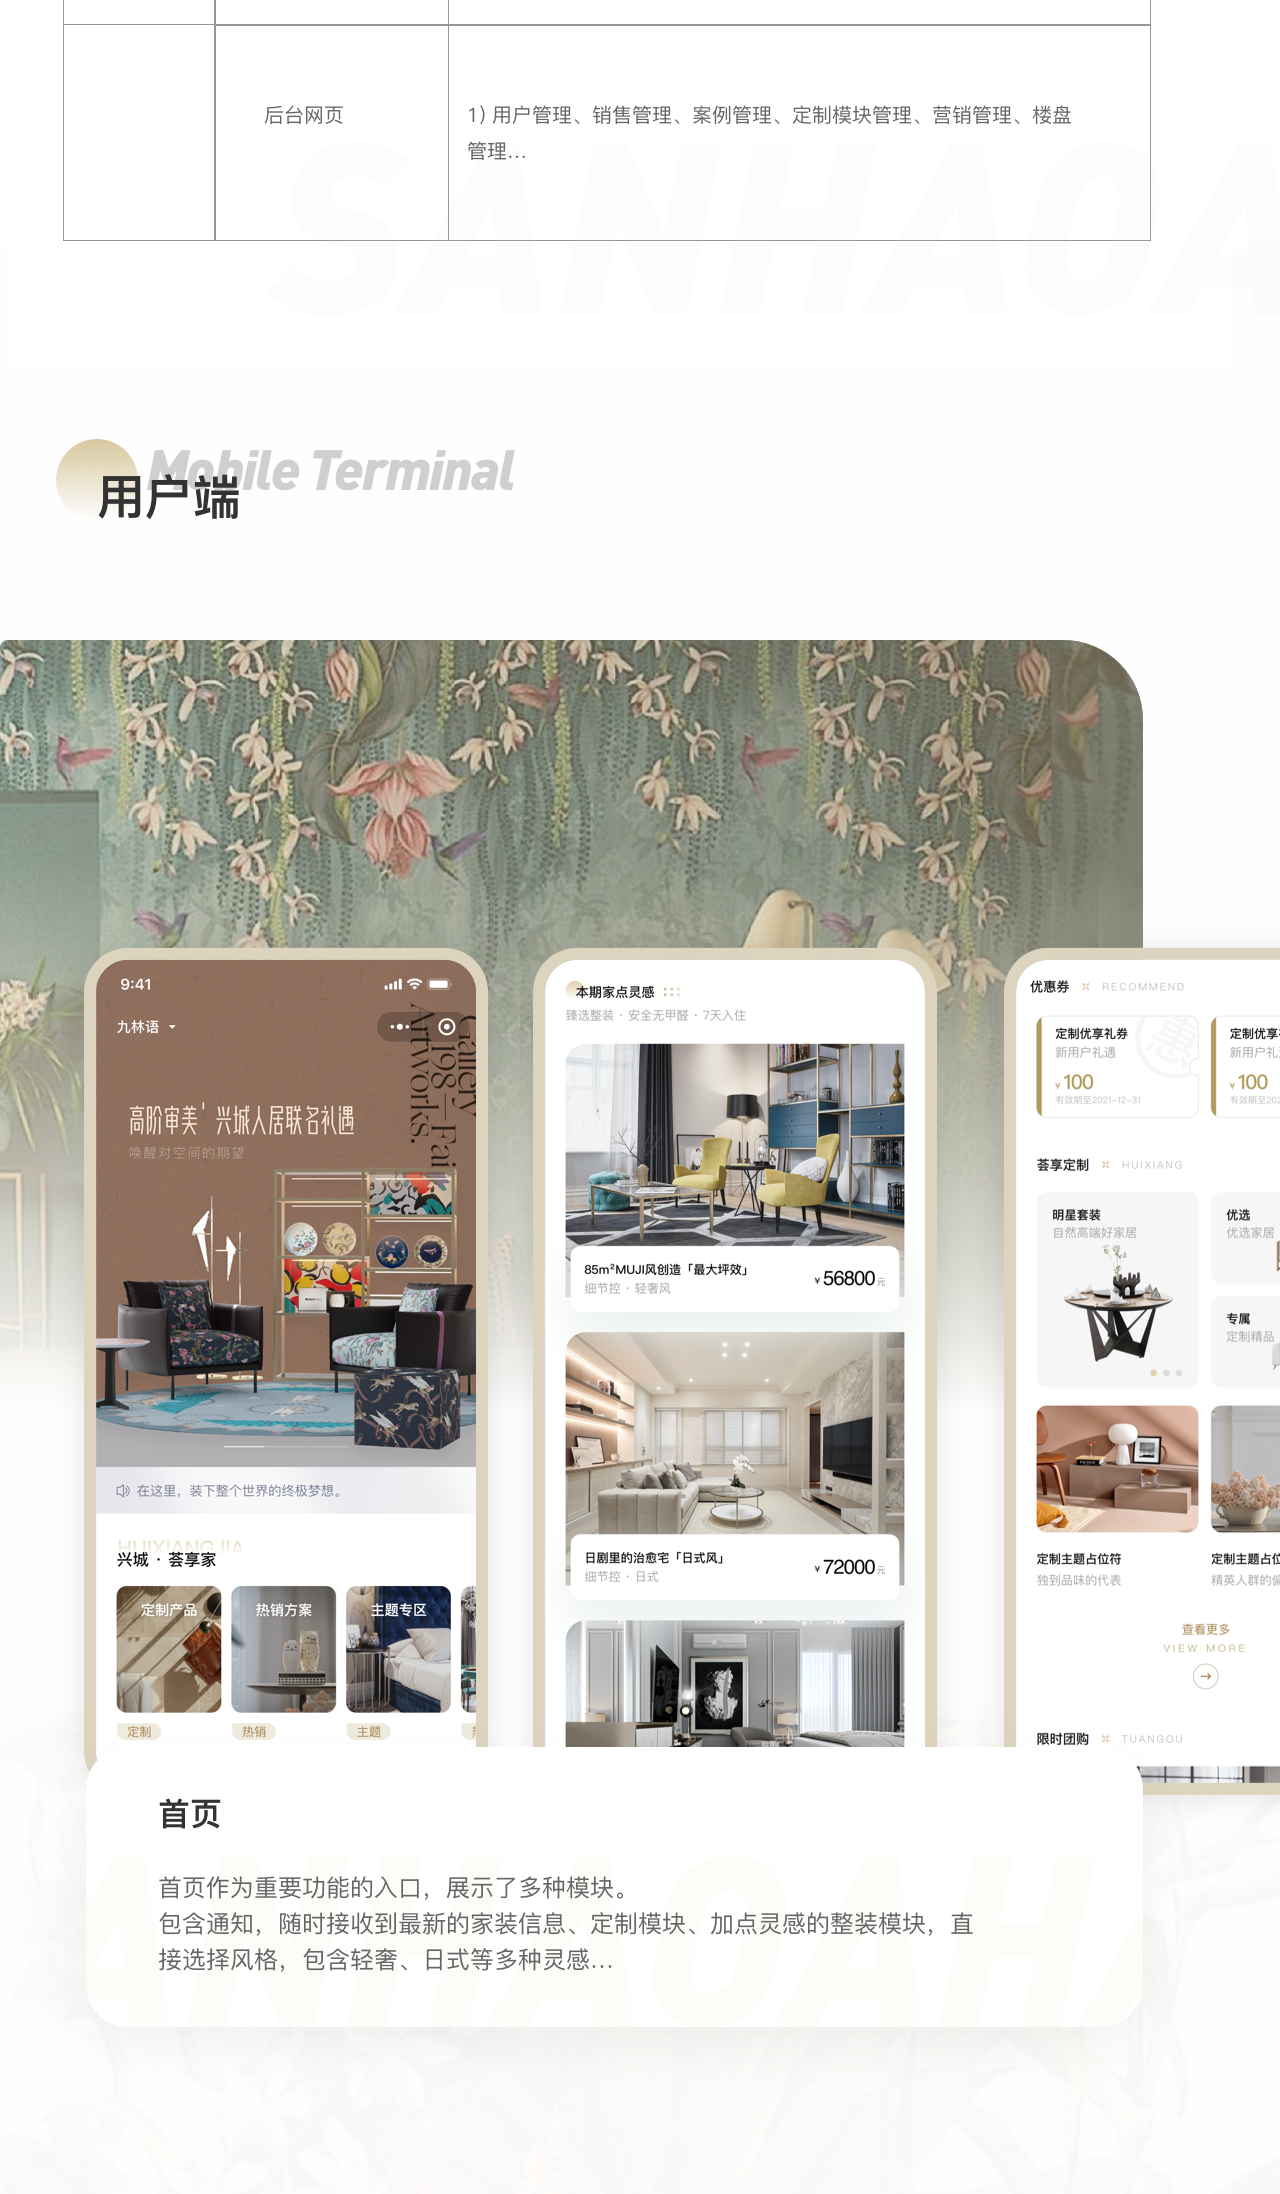 Xingcheng Habitat Real Estate Investment Group-Huixiangjia Home Decoration Platform